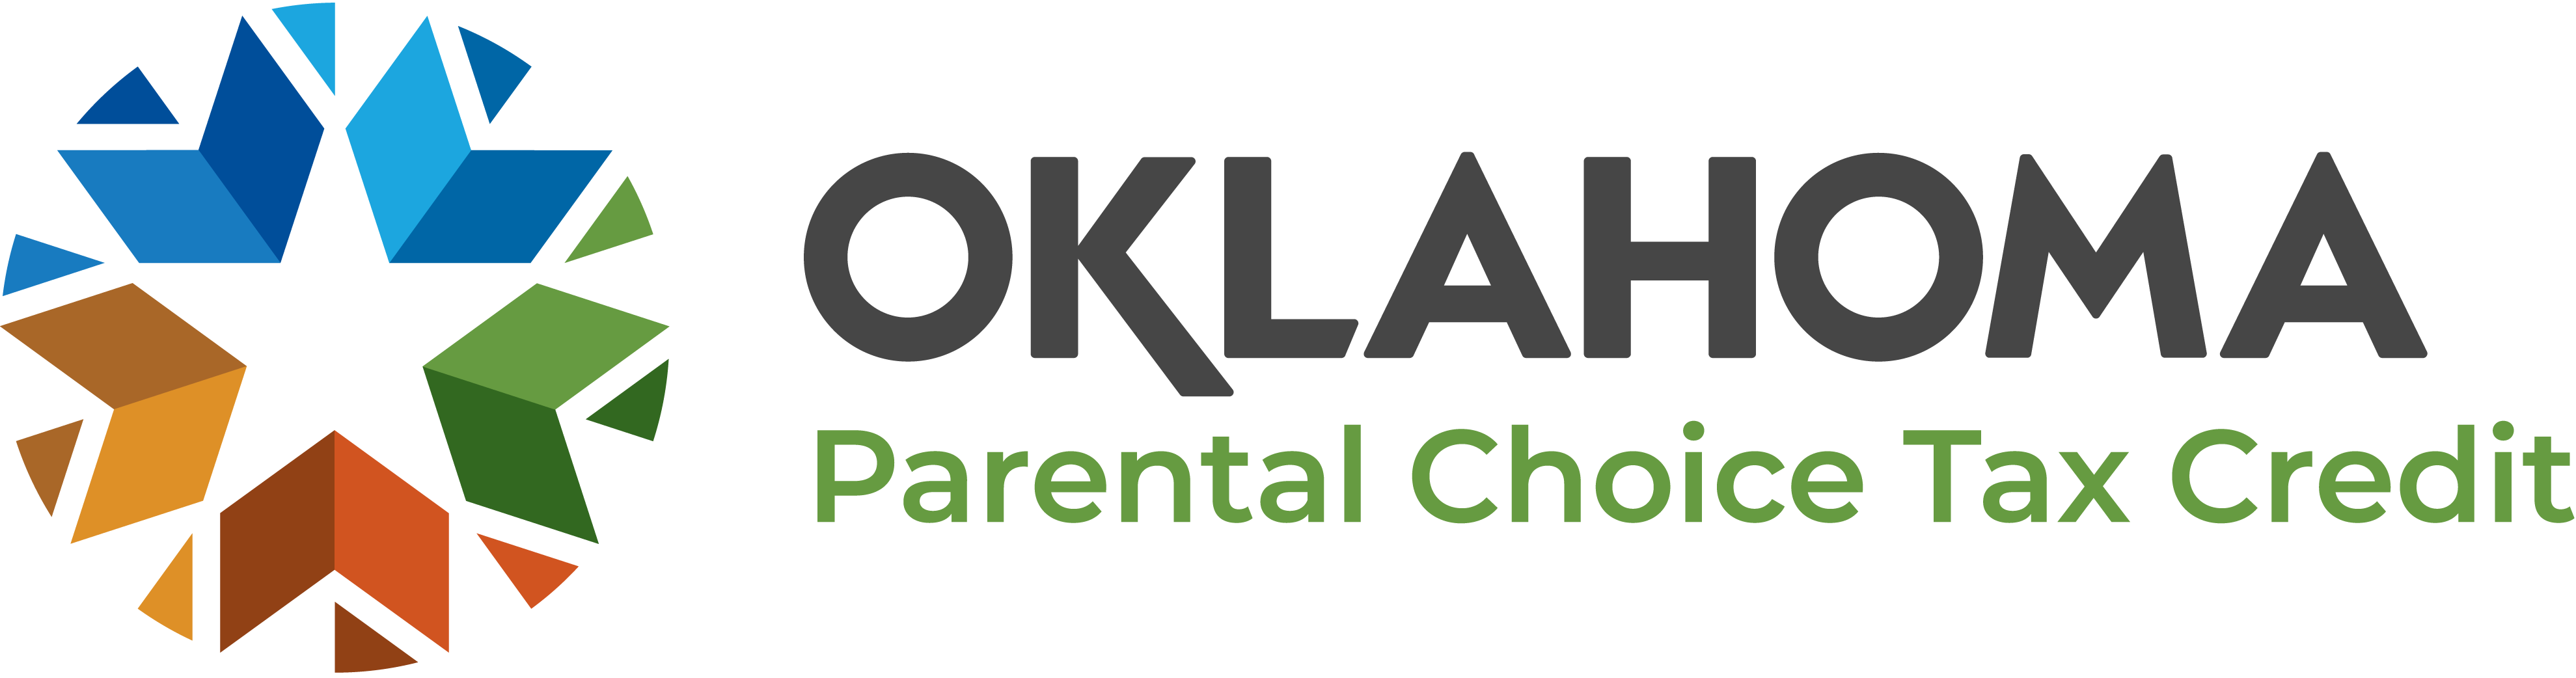 Oklahoma Parental Choice Tax Credit